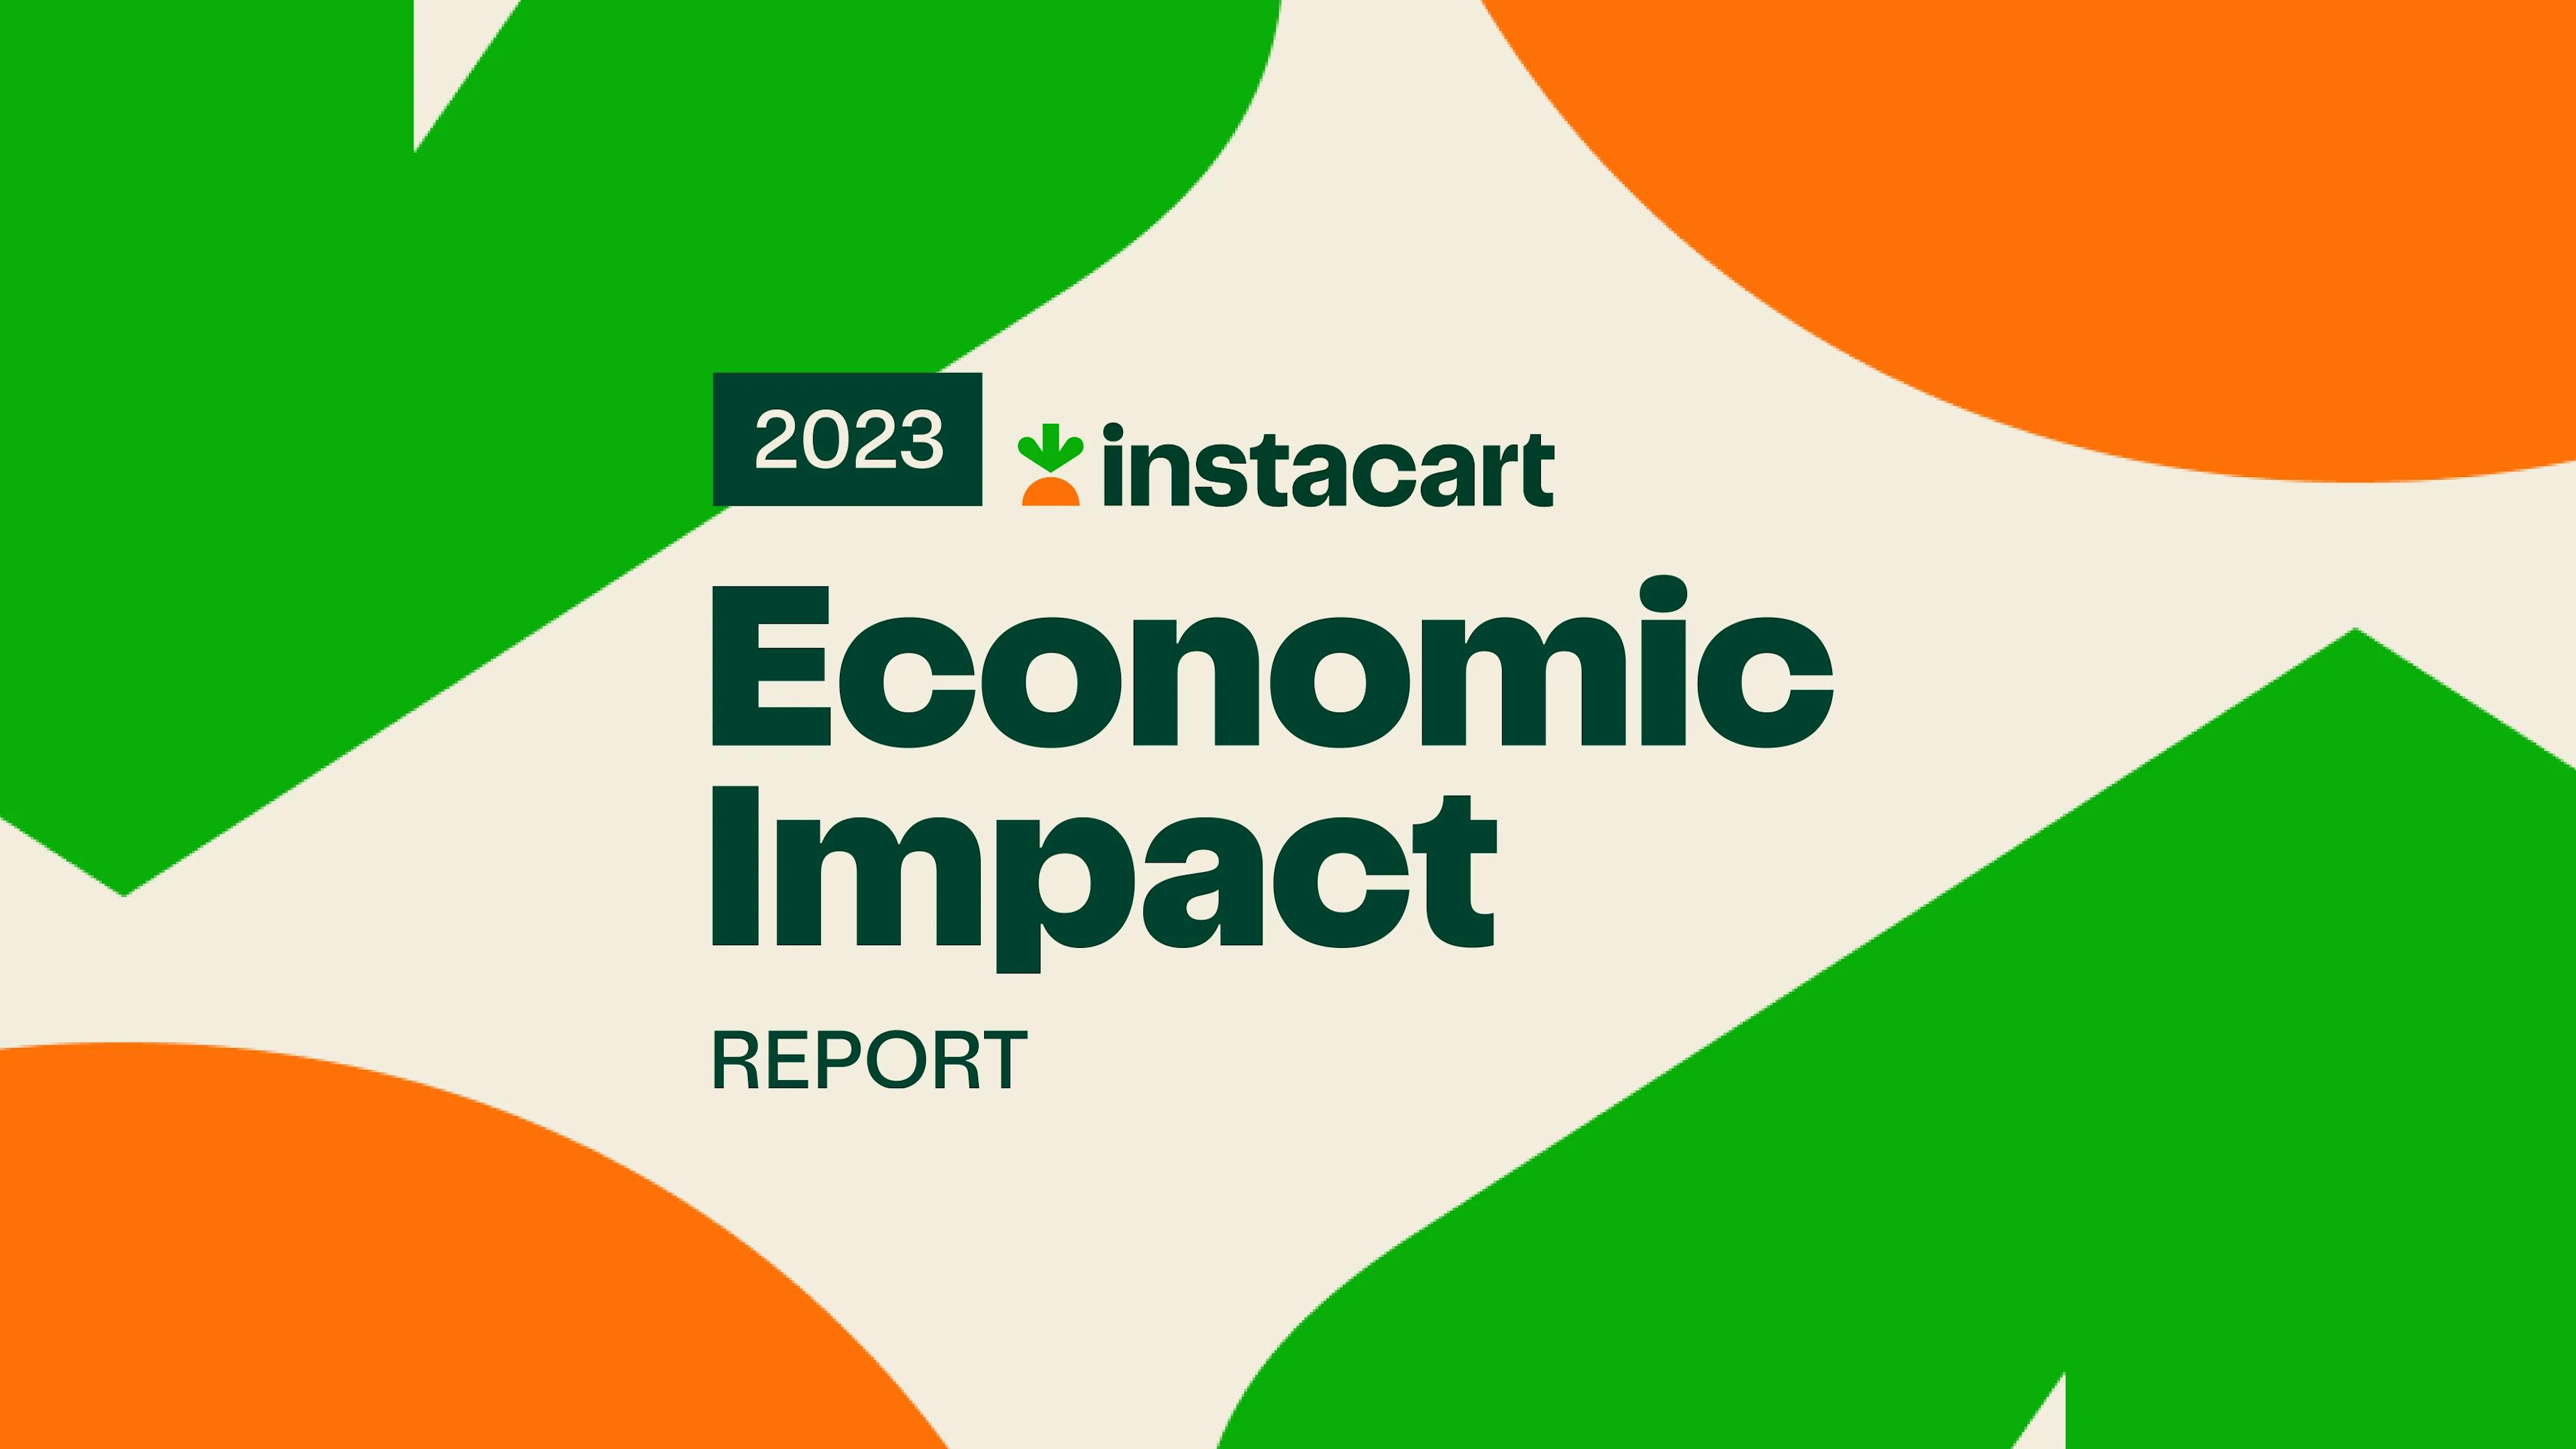 Instacart Impact Report Cover 1920x1080 v2 (1)